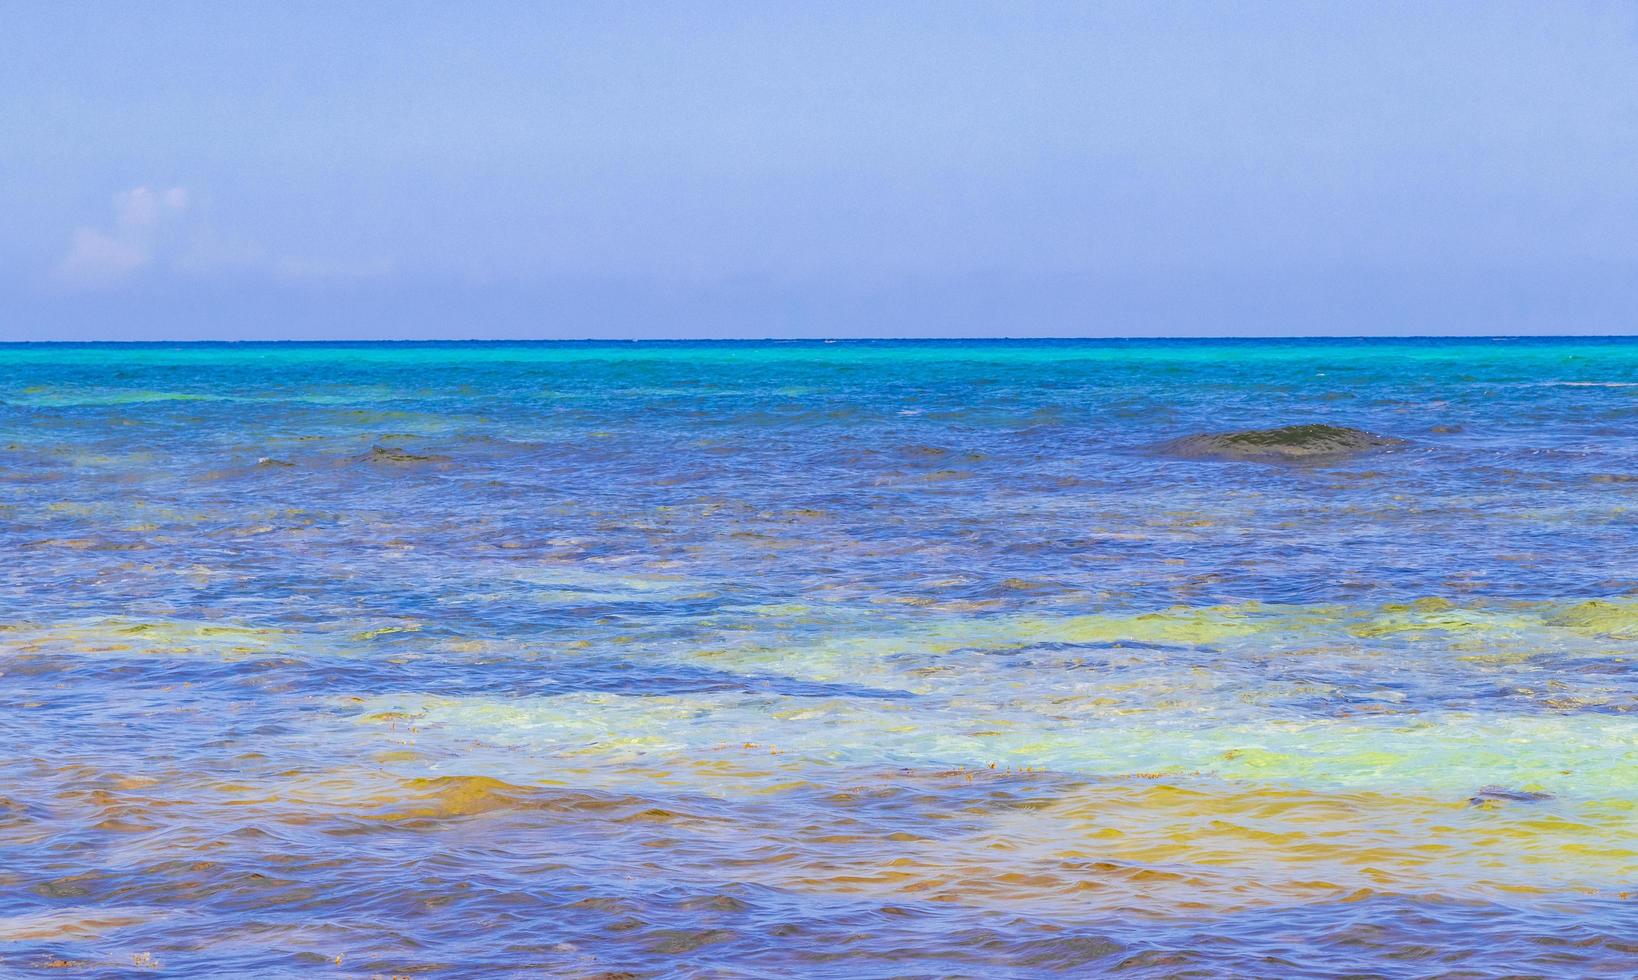 tropischer mexikanischer bunter strand punta esmeralda playa del carmen mexiko. foto